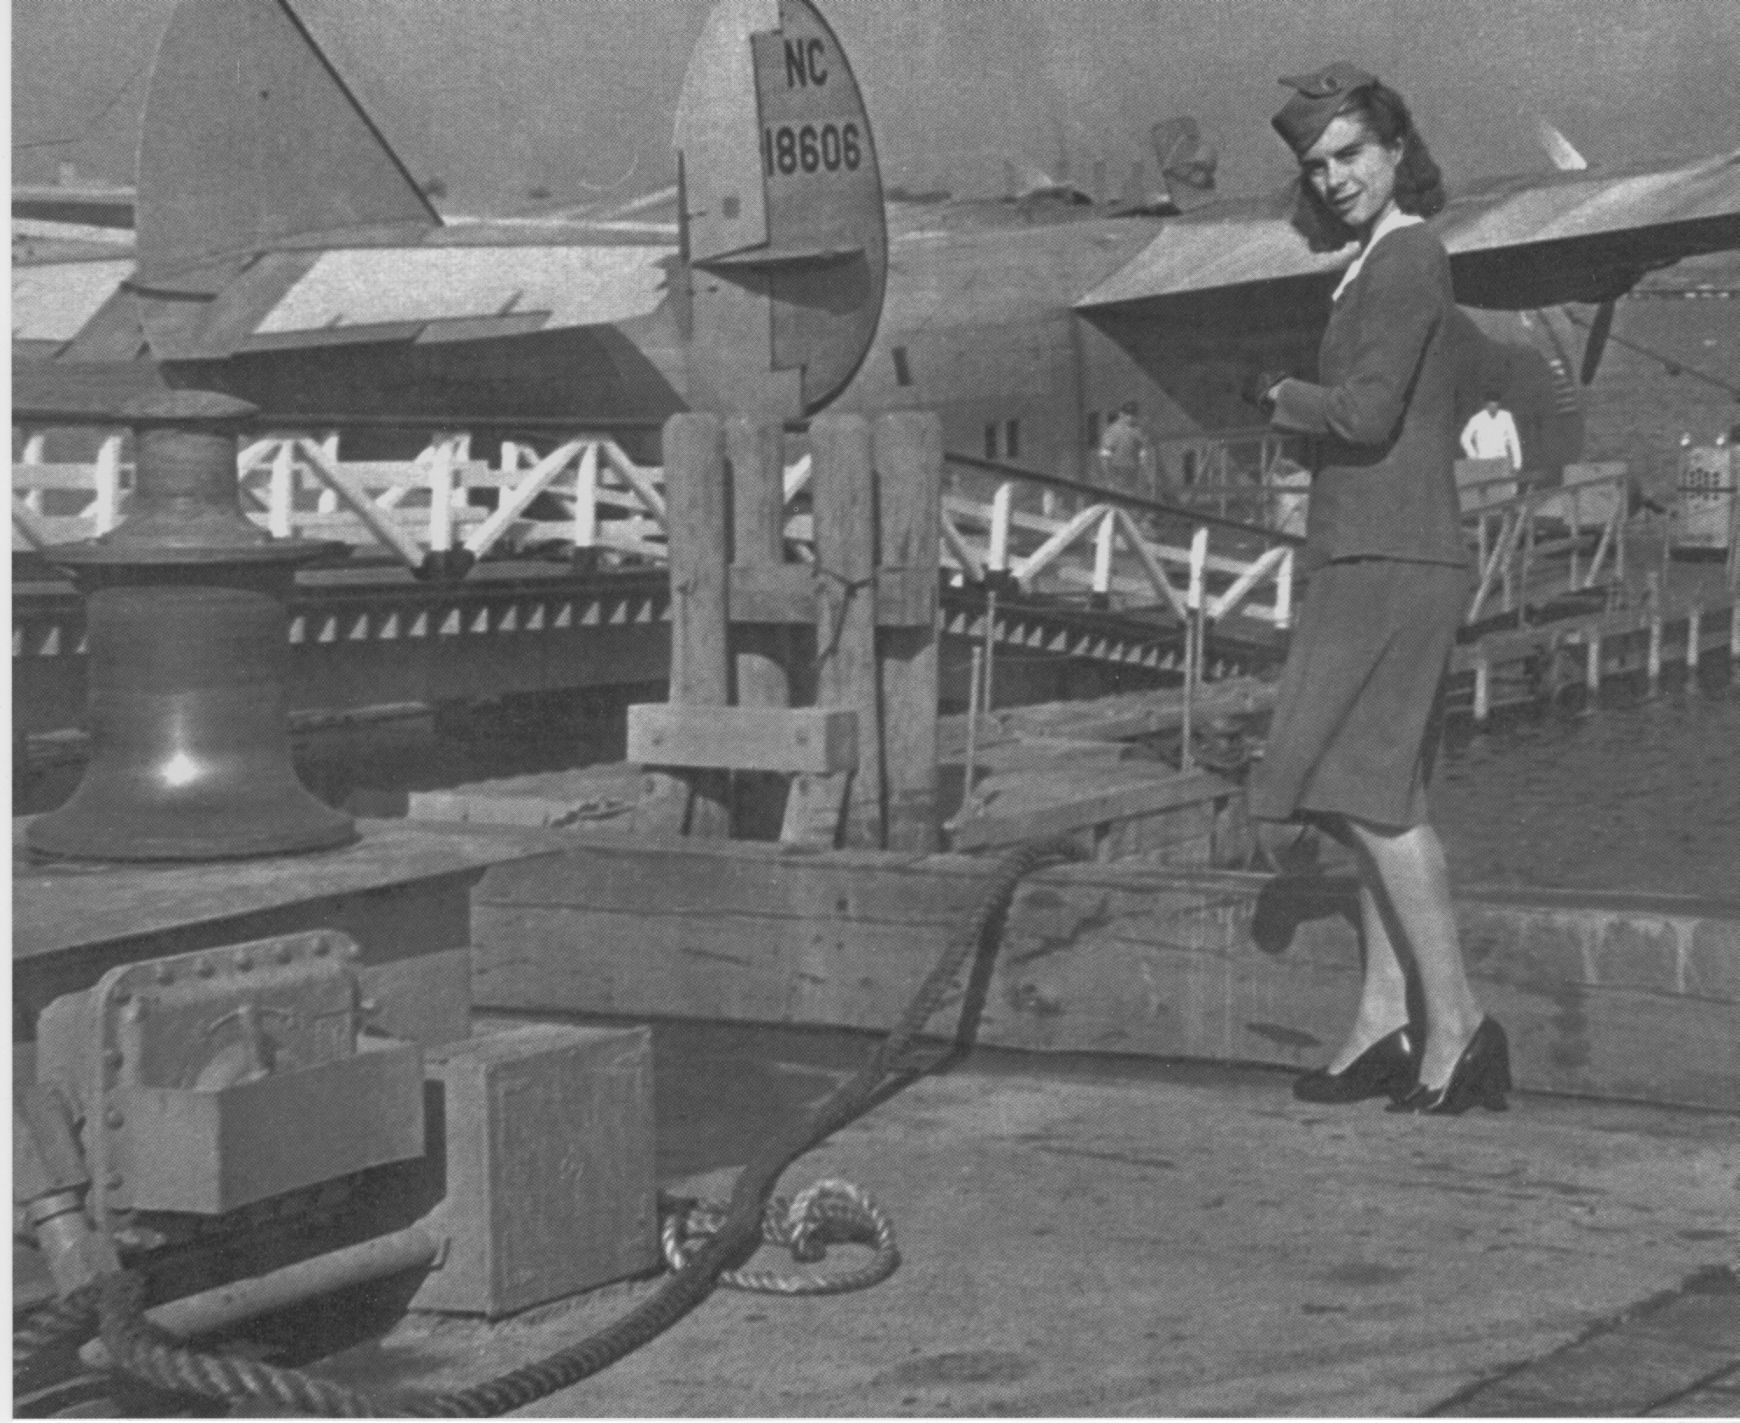 1945 Stewardess Lotta Westerhortsmann posing with Boeing 314 flying boat at the dock